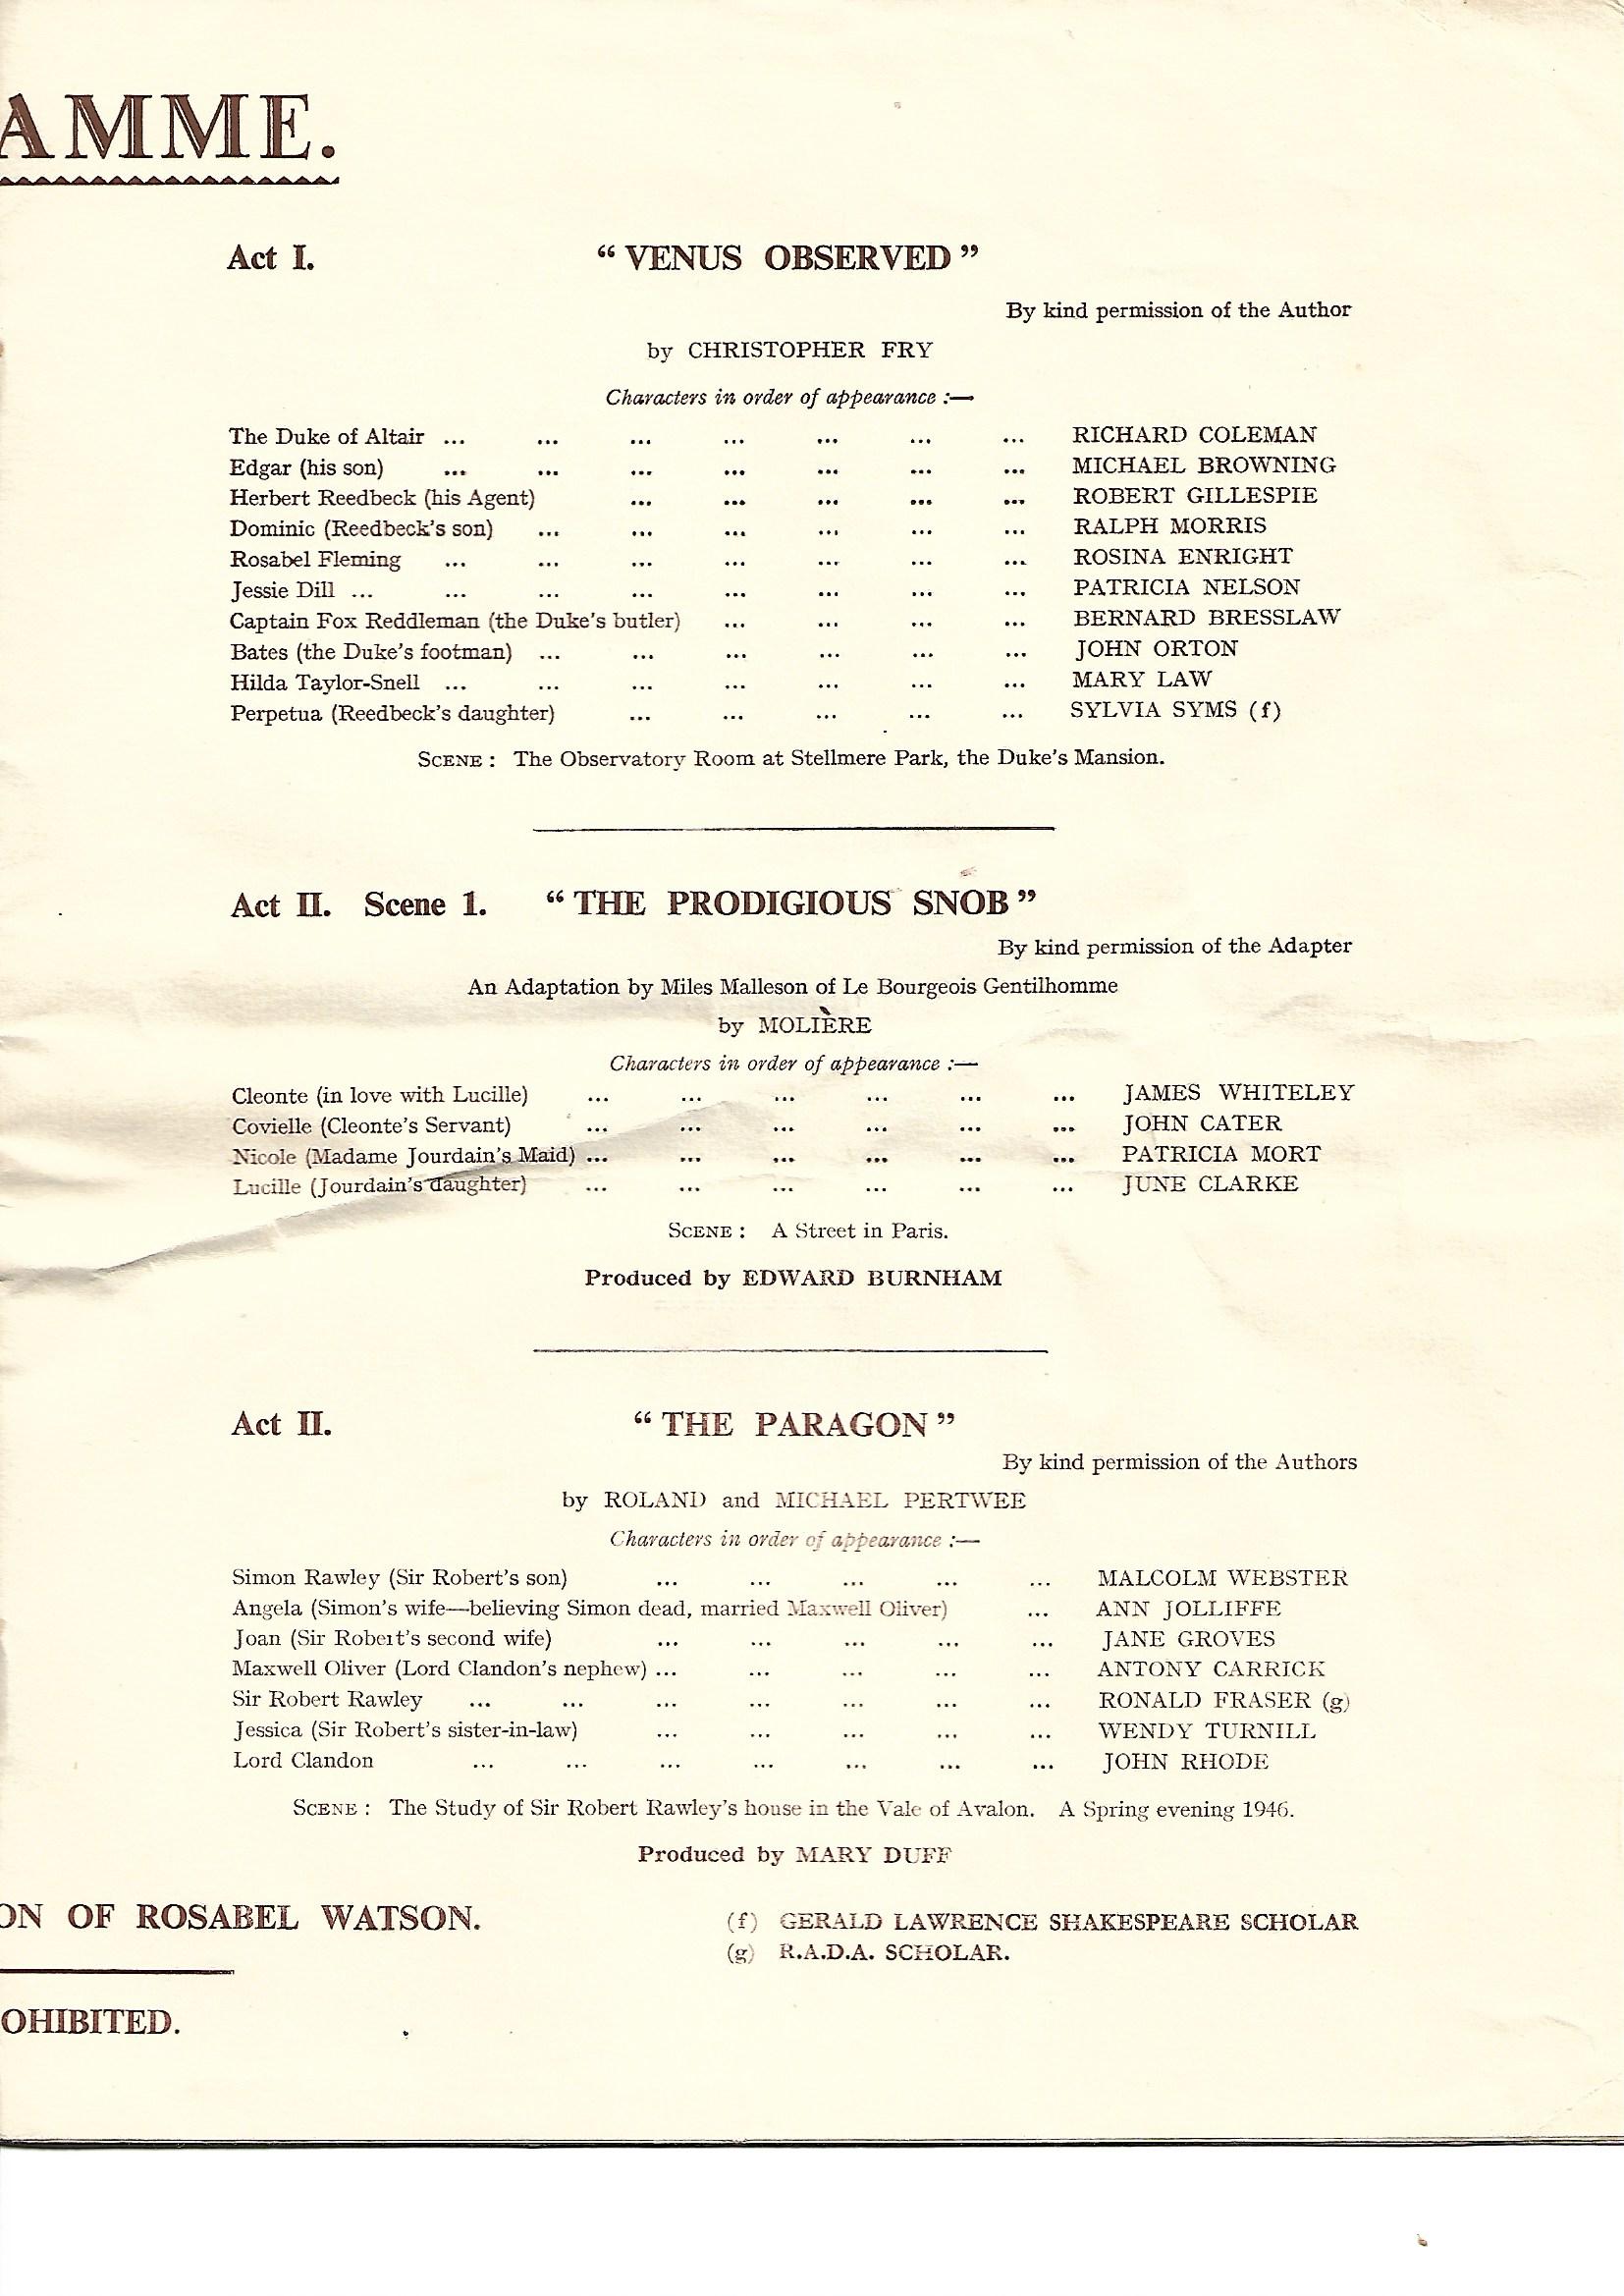 RADA Annual Student Performance programme 1953, Venus Observed, The Prodigious Snob, The Paragon